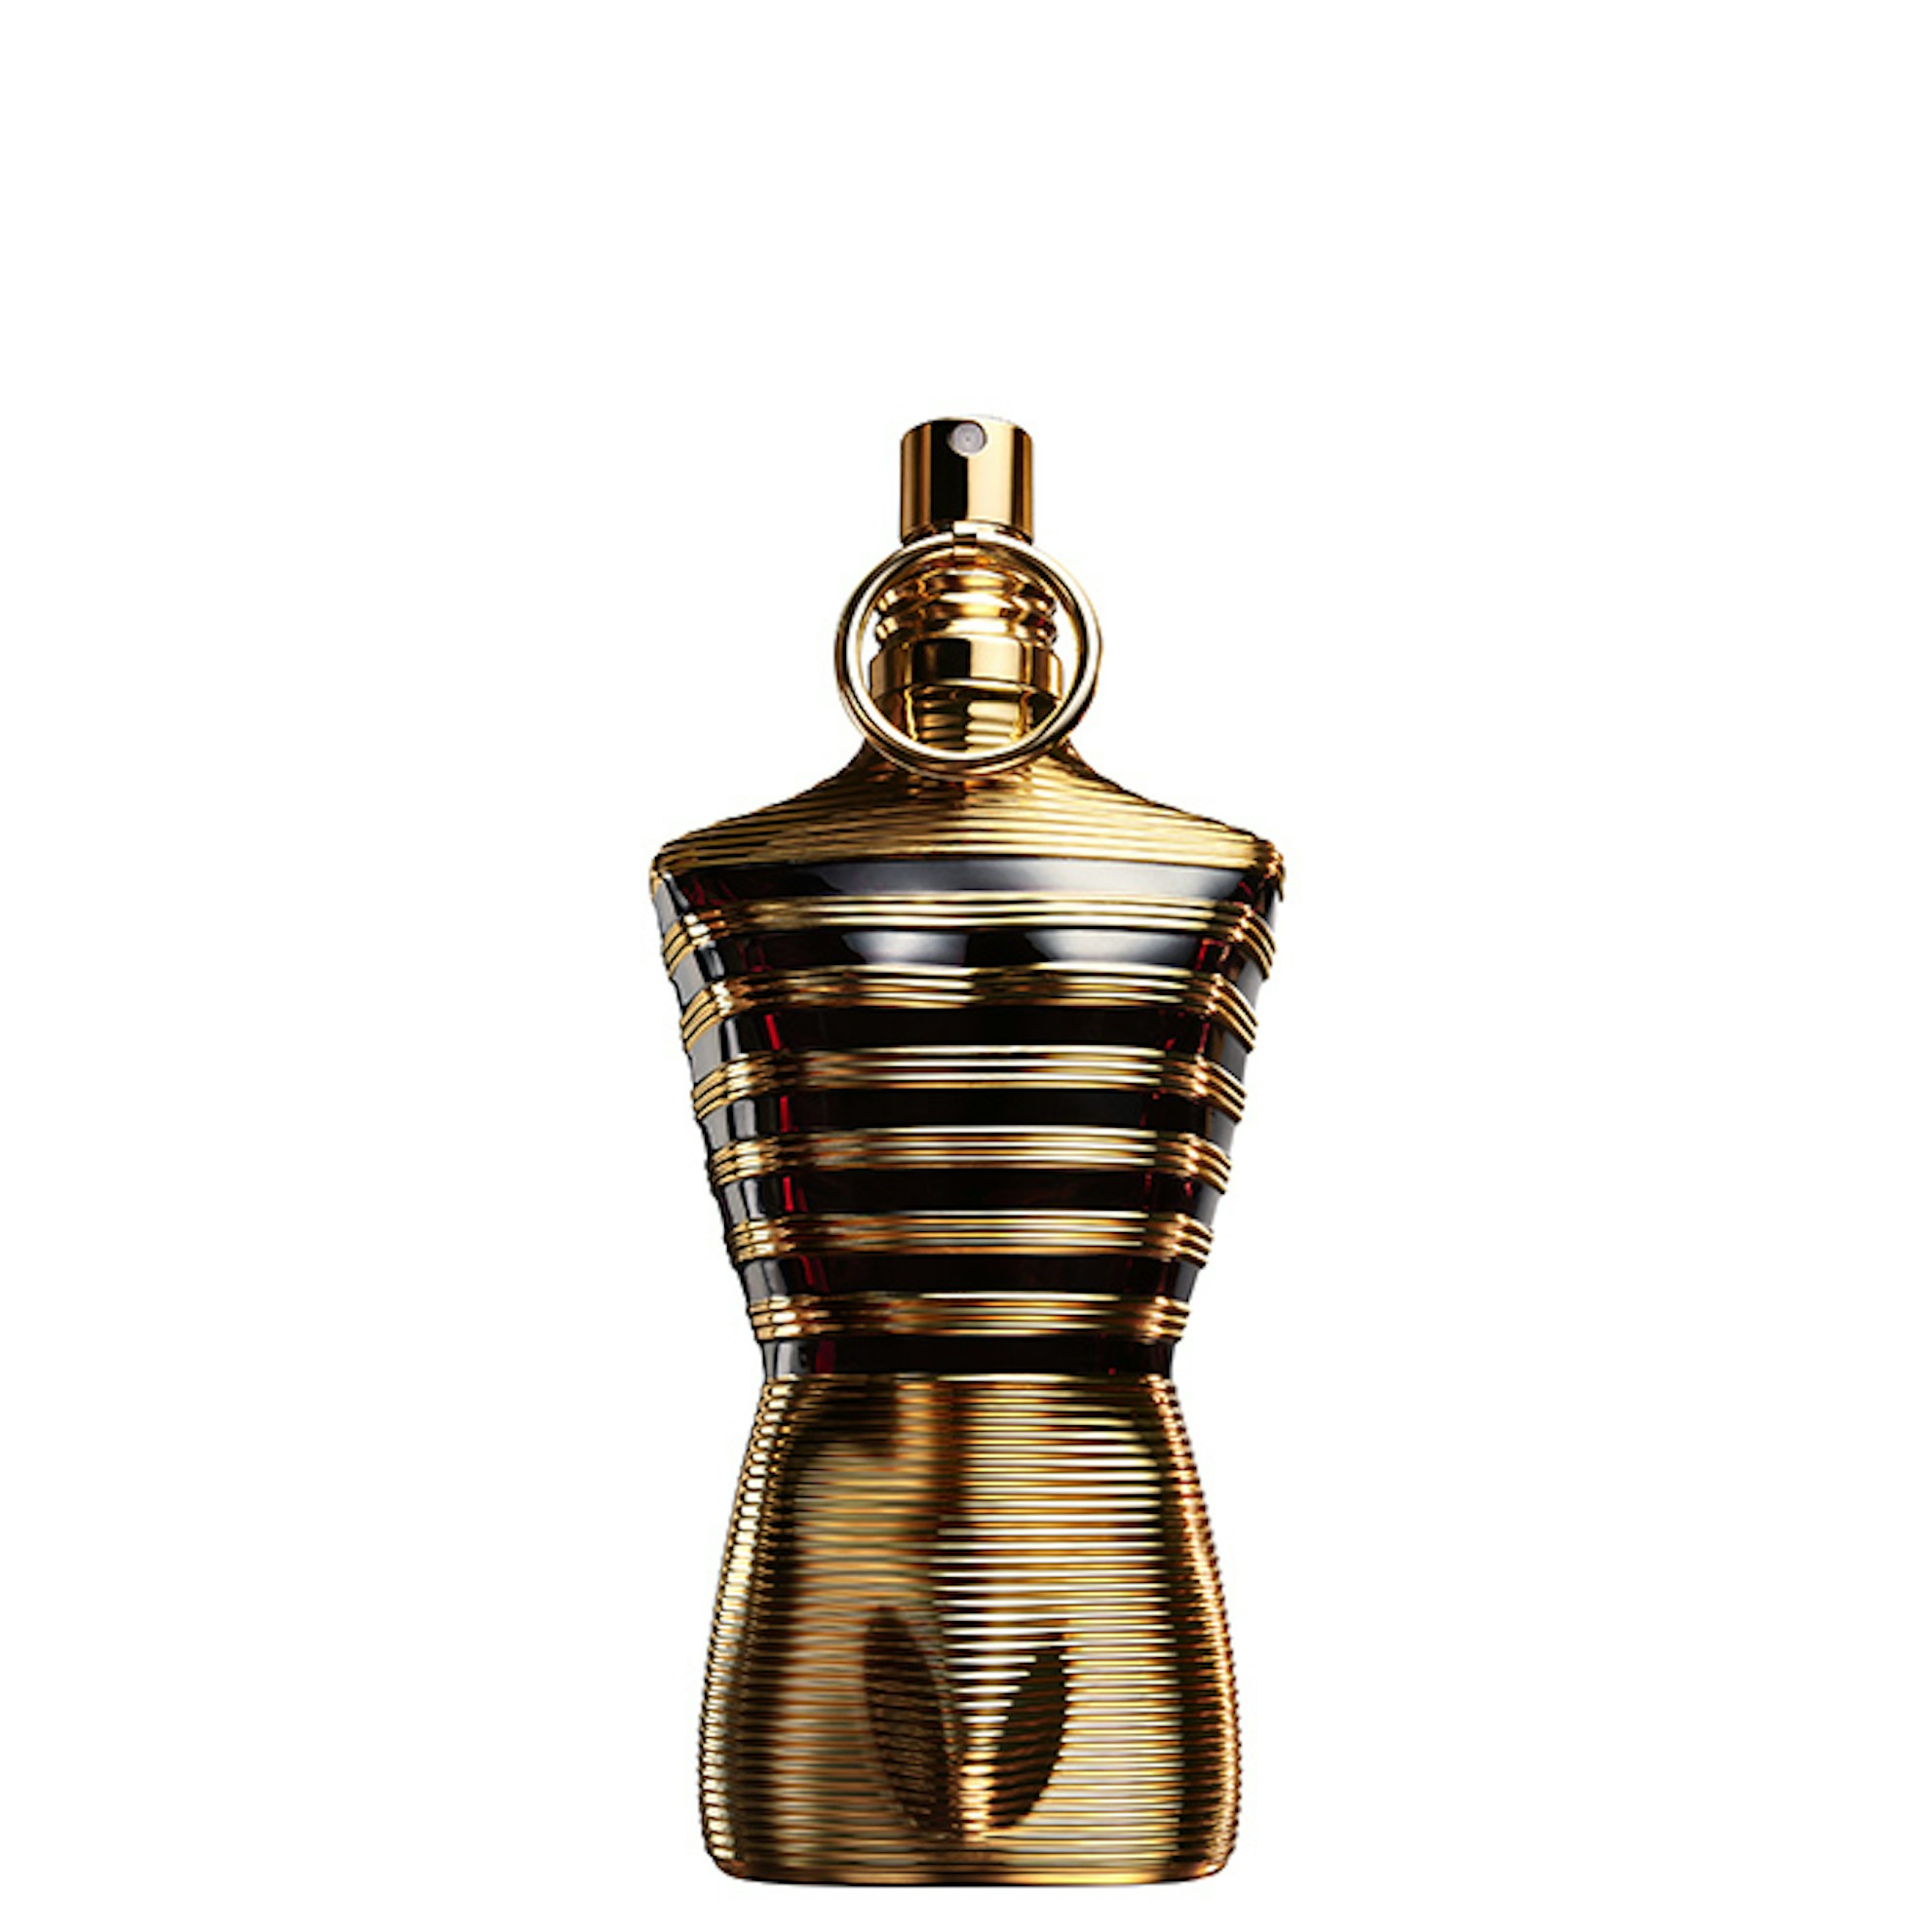 Jean Paul Gaultier Le Male Elixir Parfum 75ml